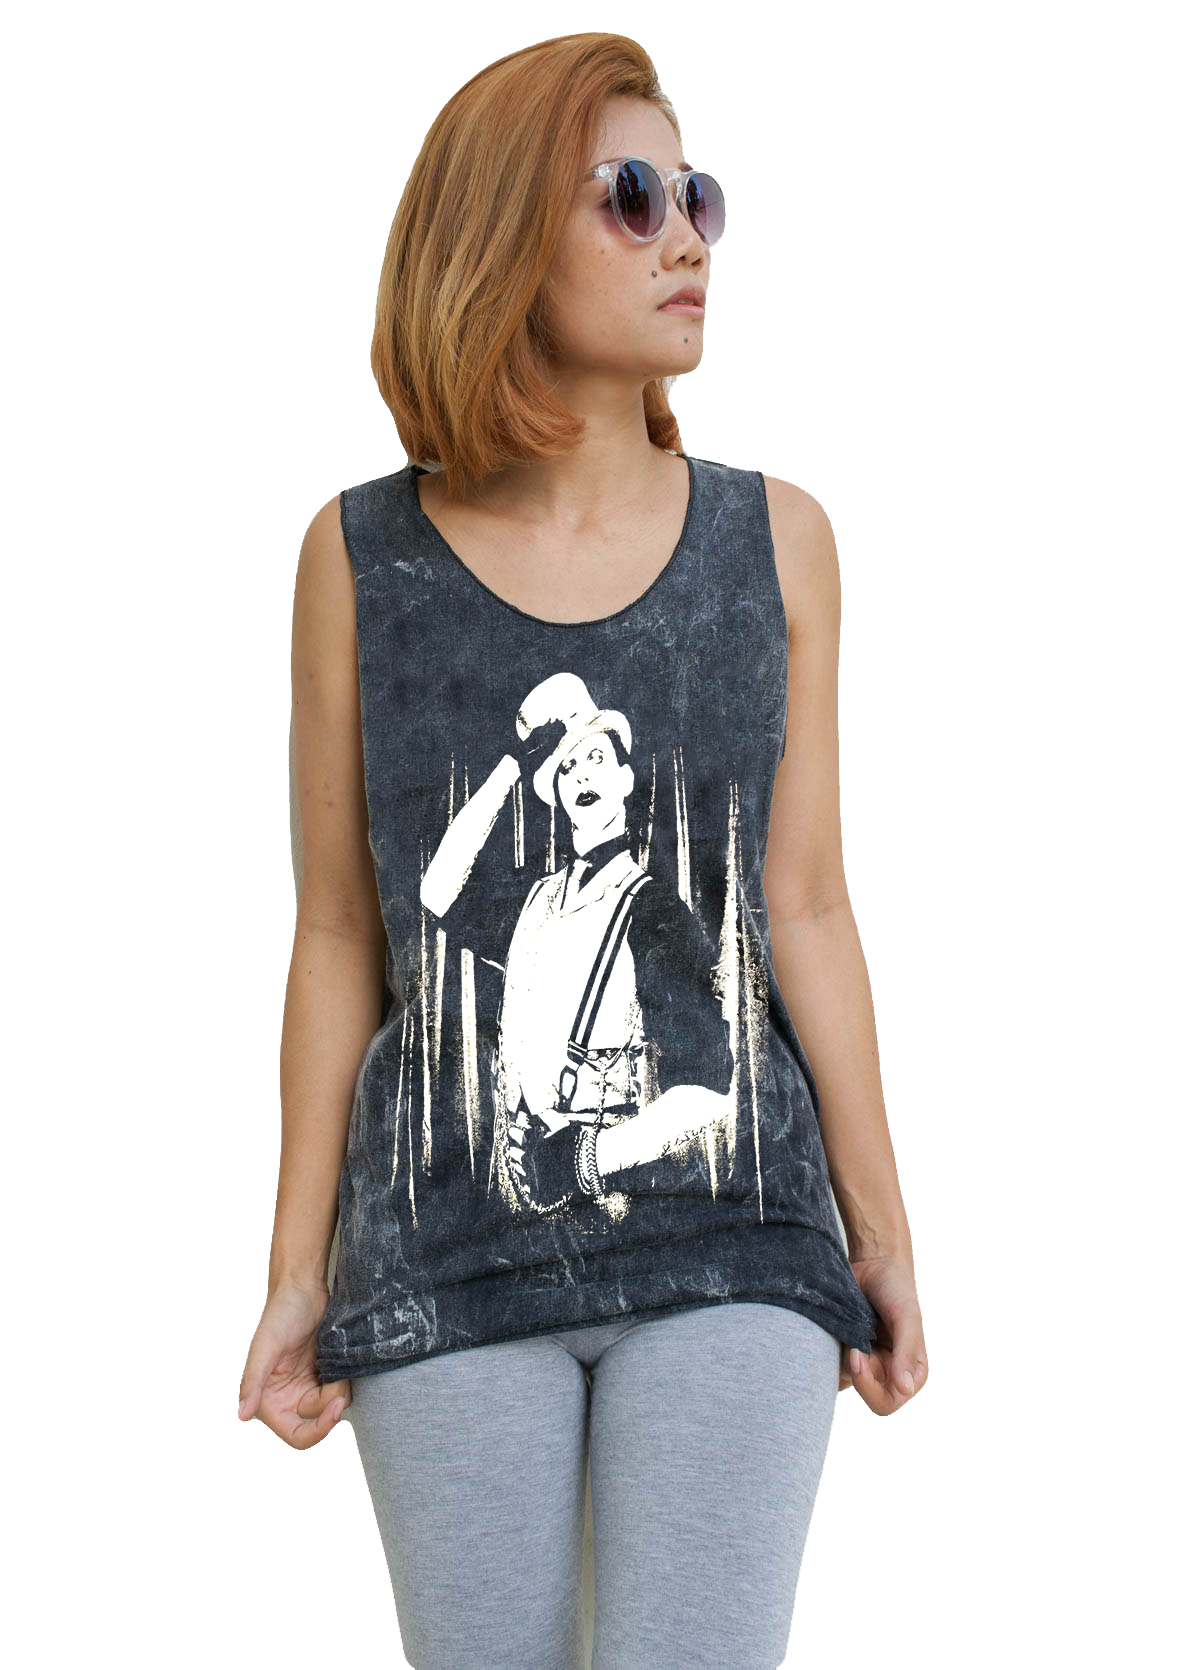 Unisex Marilyn Manson Tank-Top Singlet vest Sleeveless T-shirt